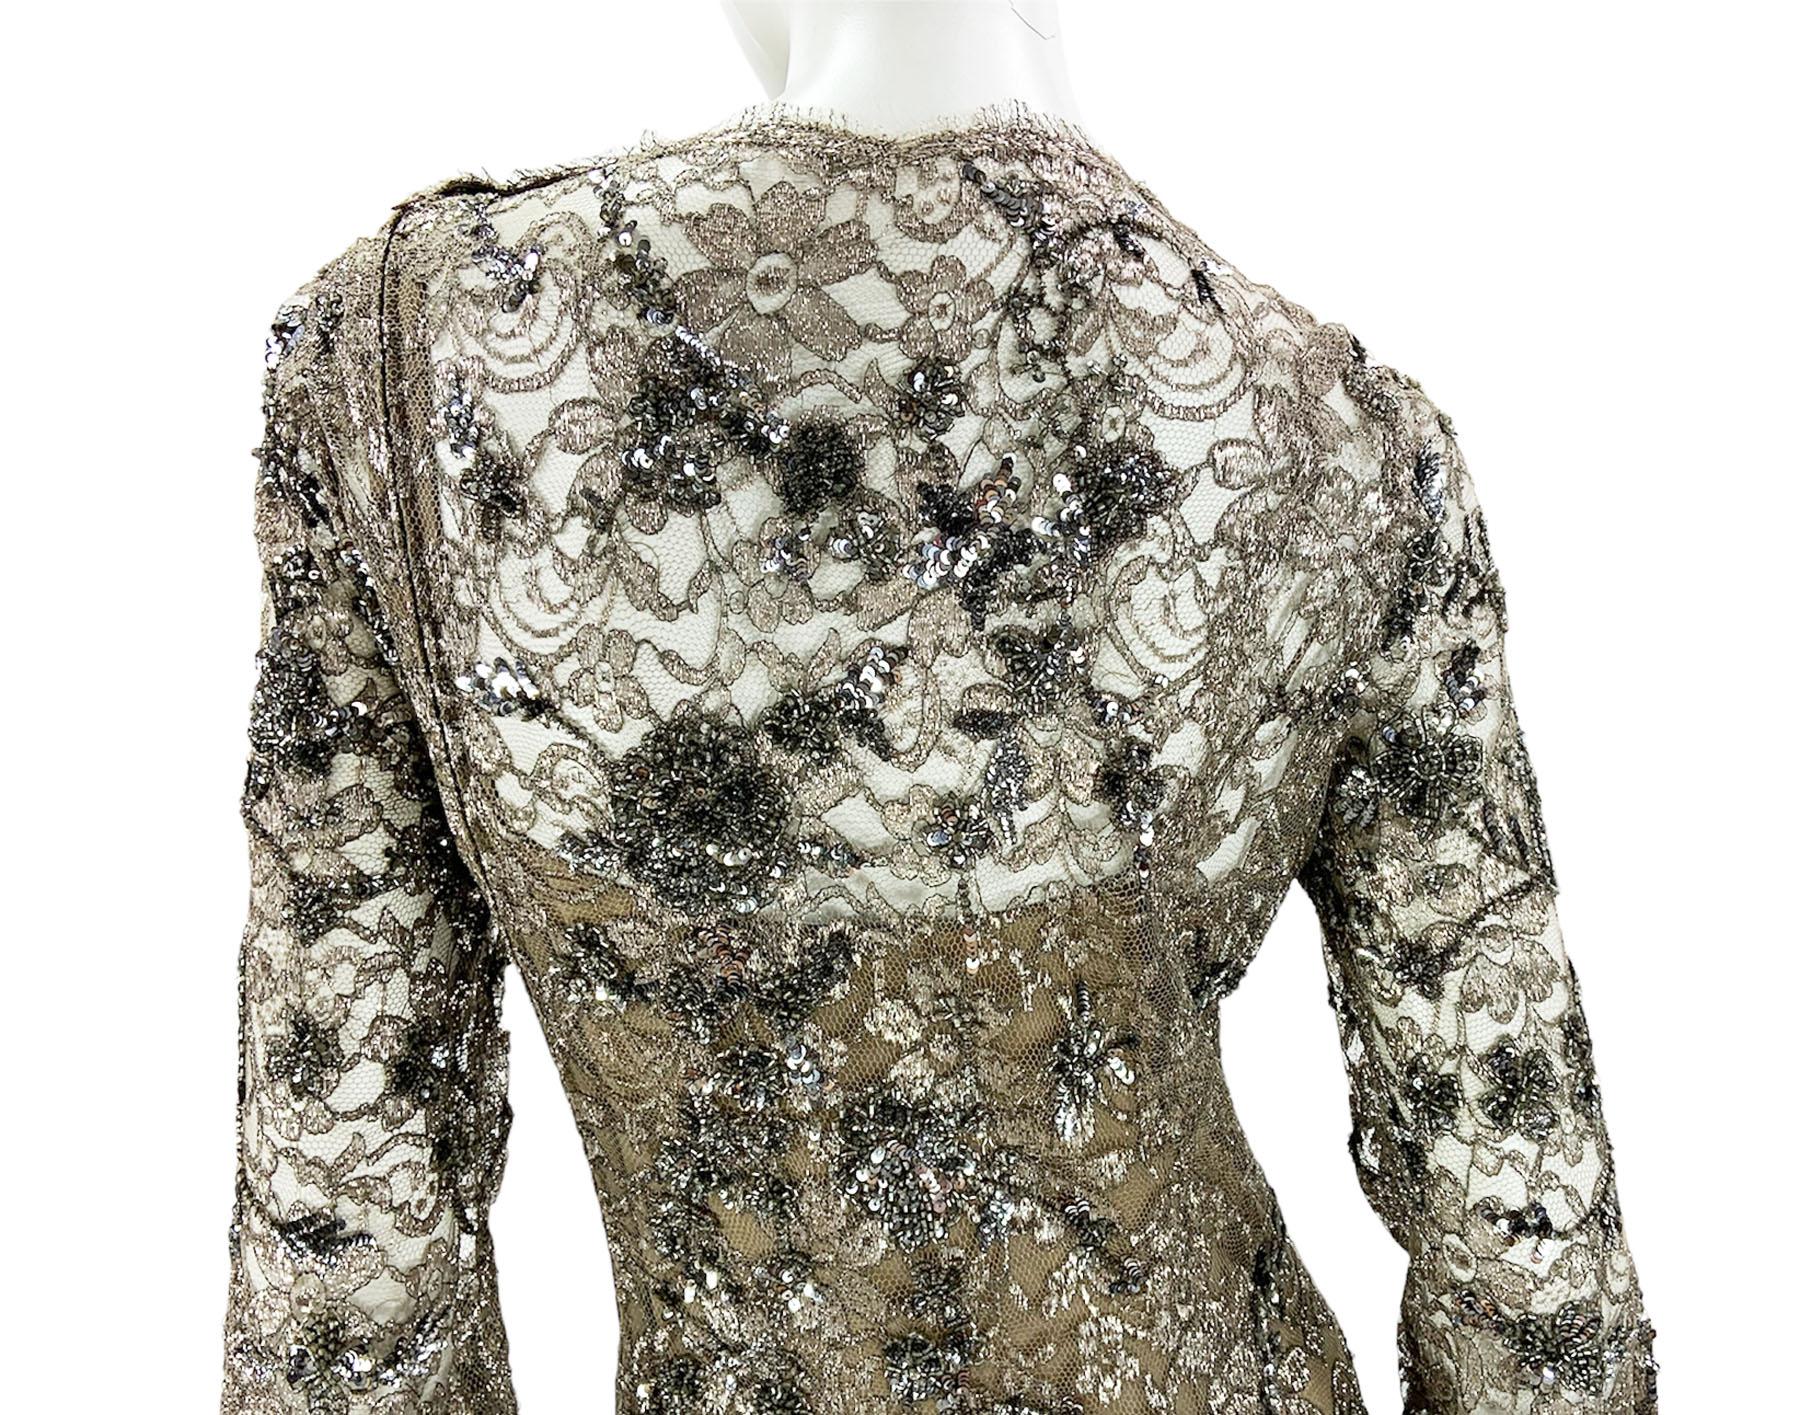 Vintage Oscar de la Renta Fully Embellished Smoky Gray Lace Dress Gown  7